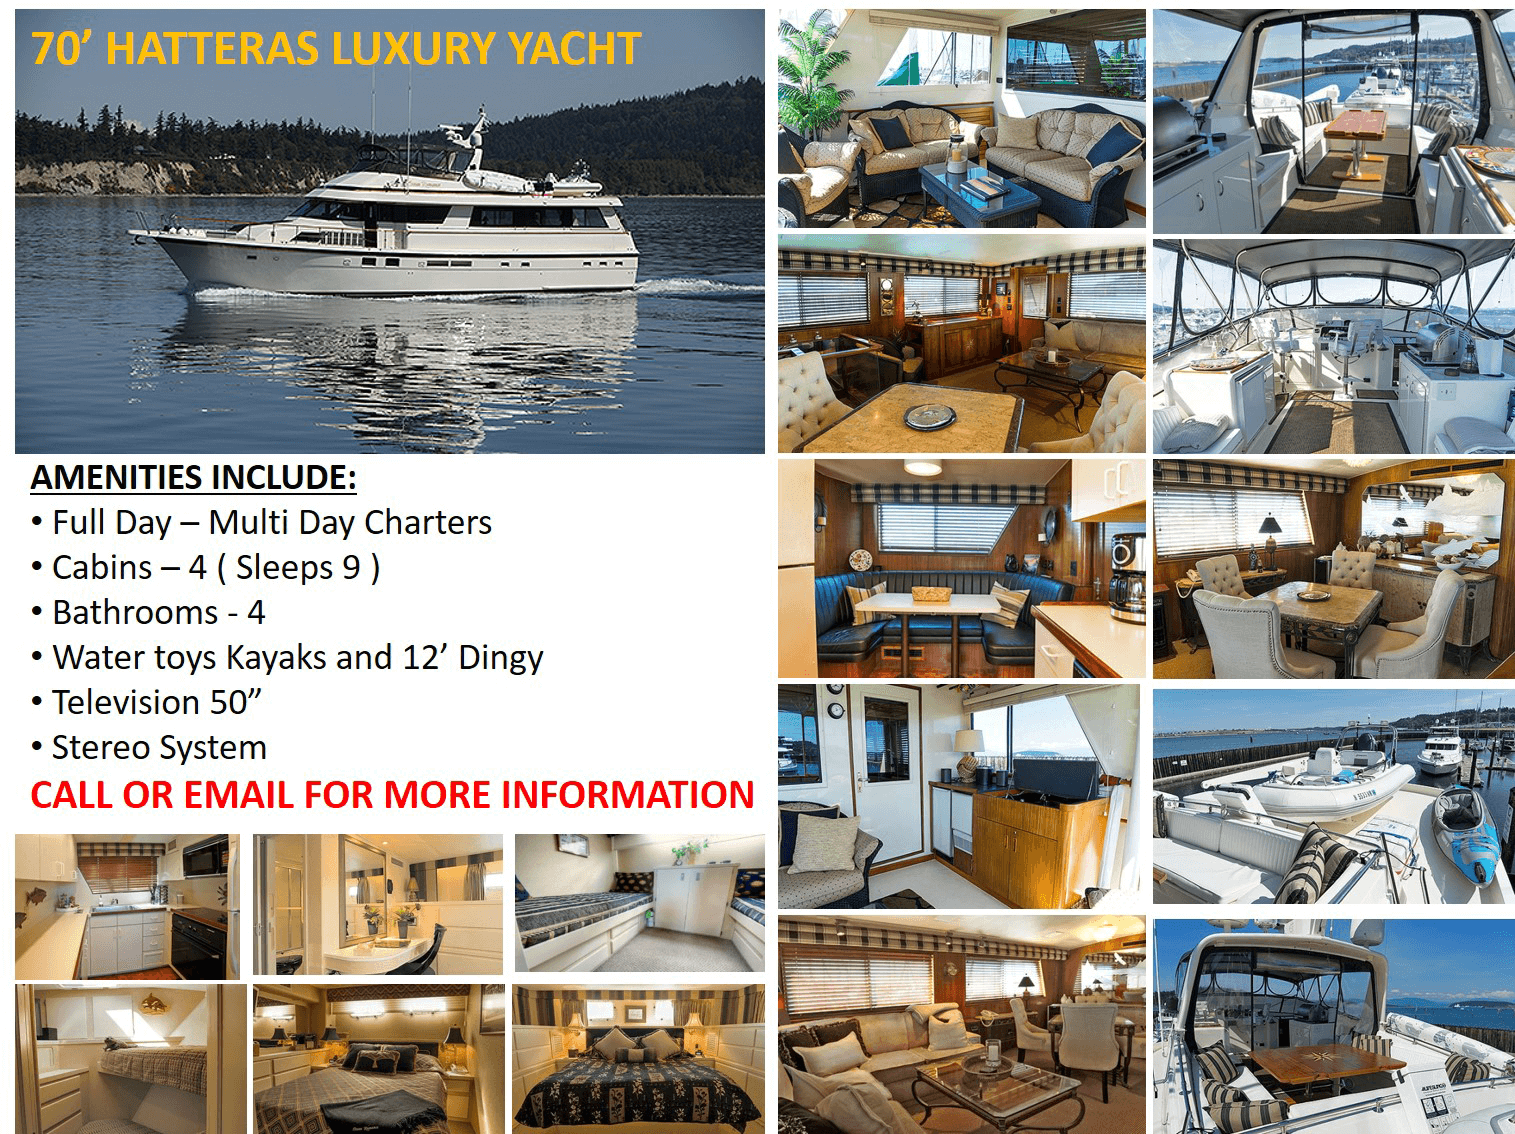 70-hatteras-luxury-yacht